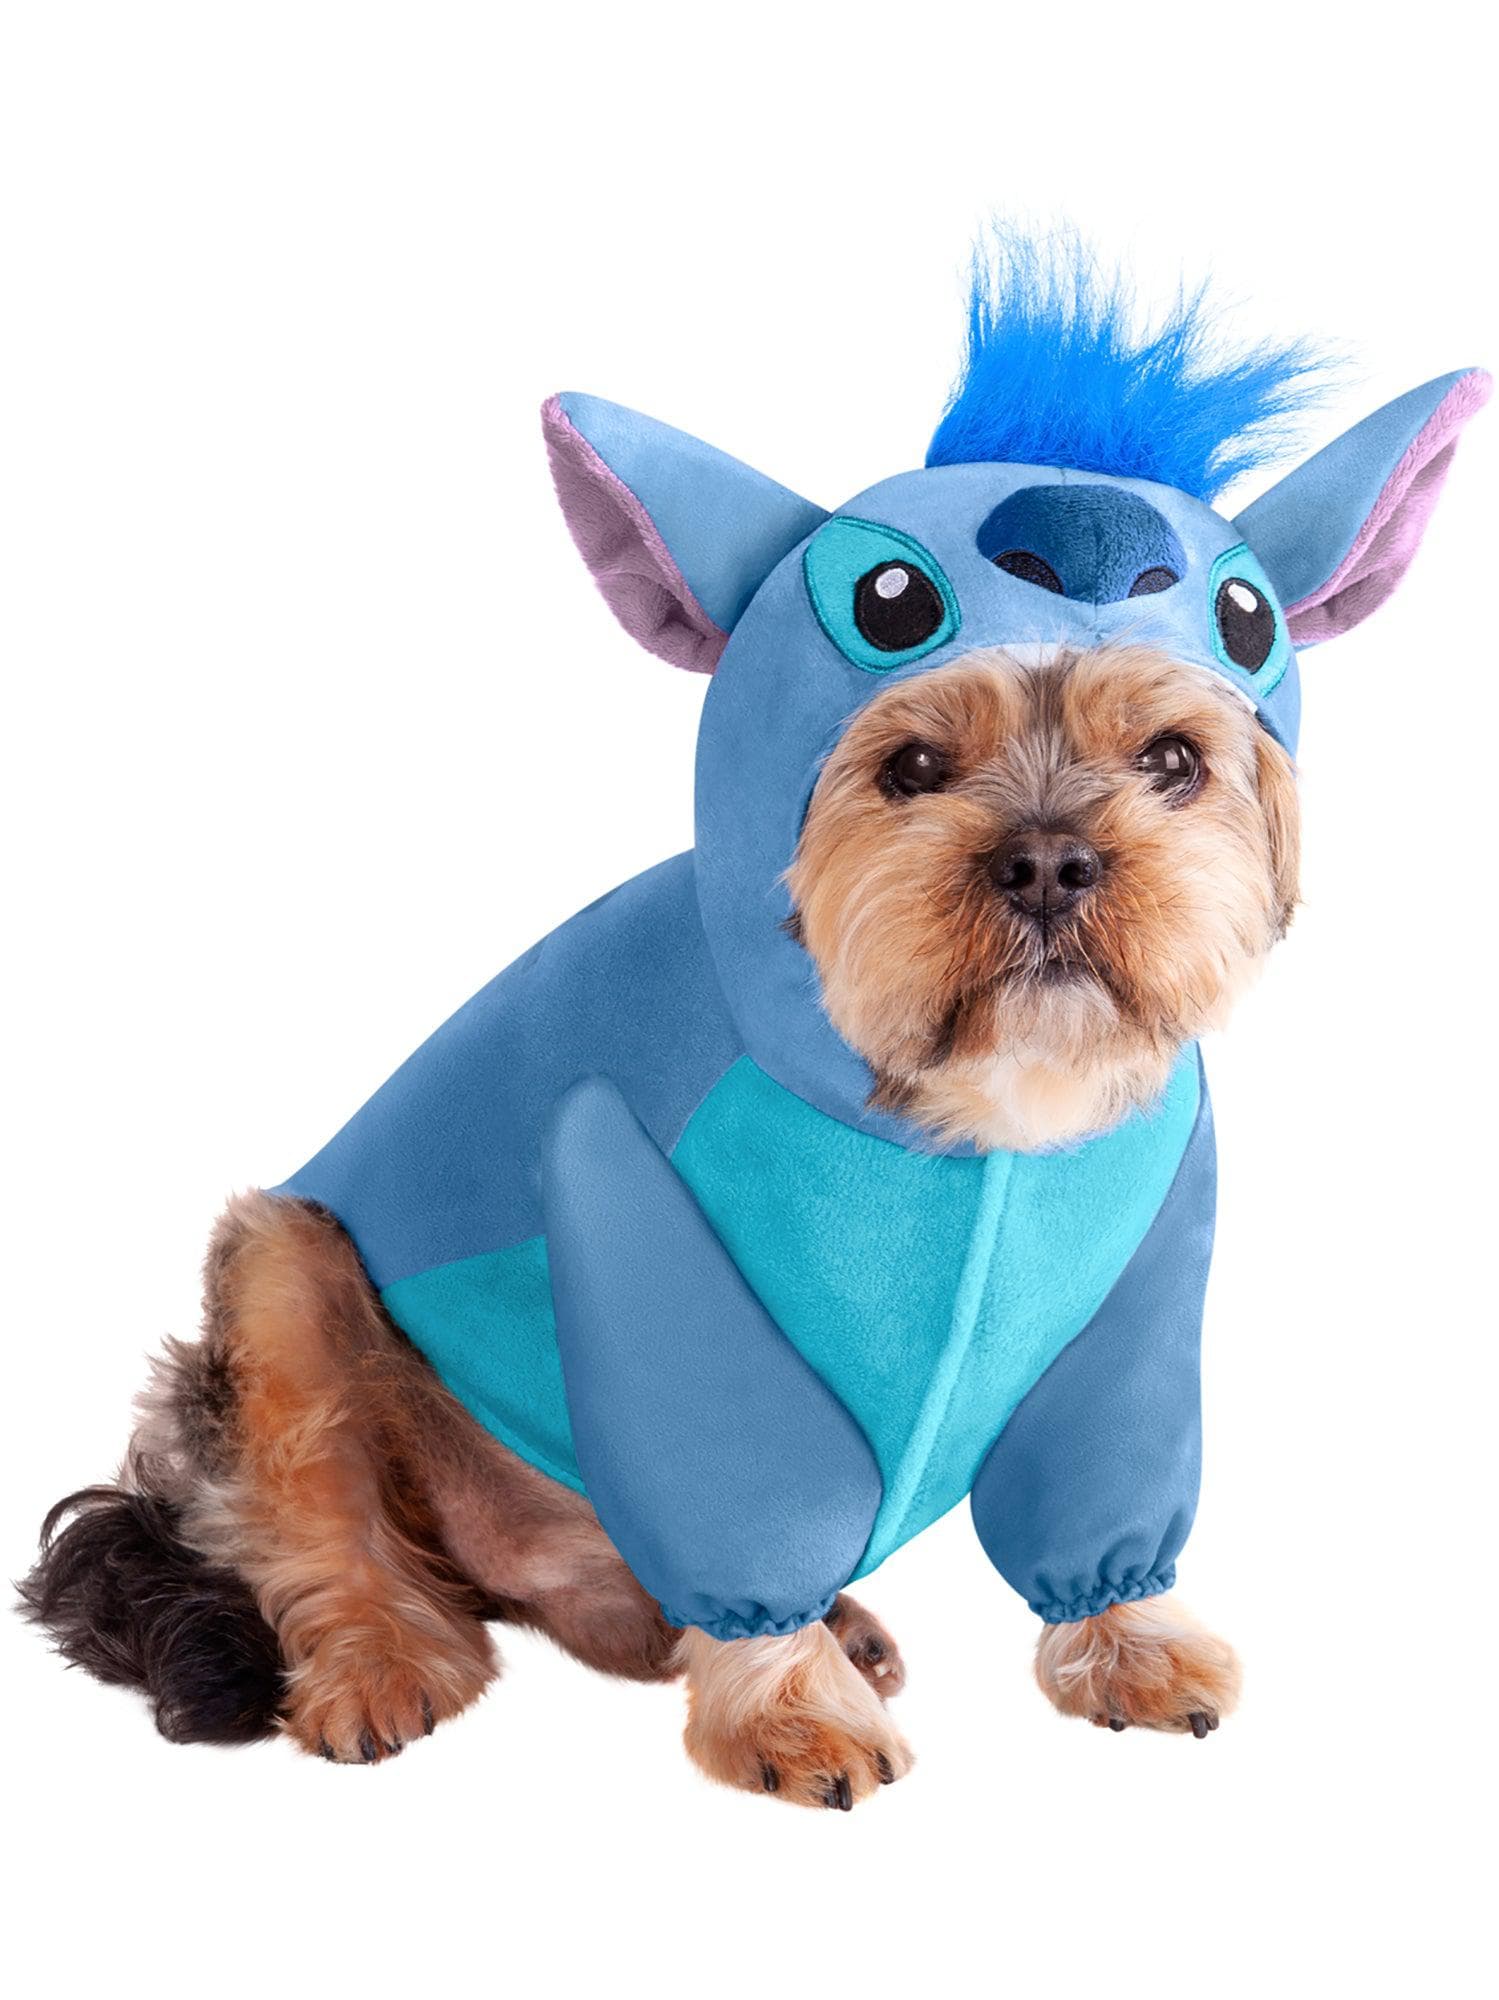 Lilo and Stitch - Stitch Pet Costume - costumes.com